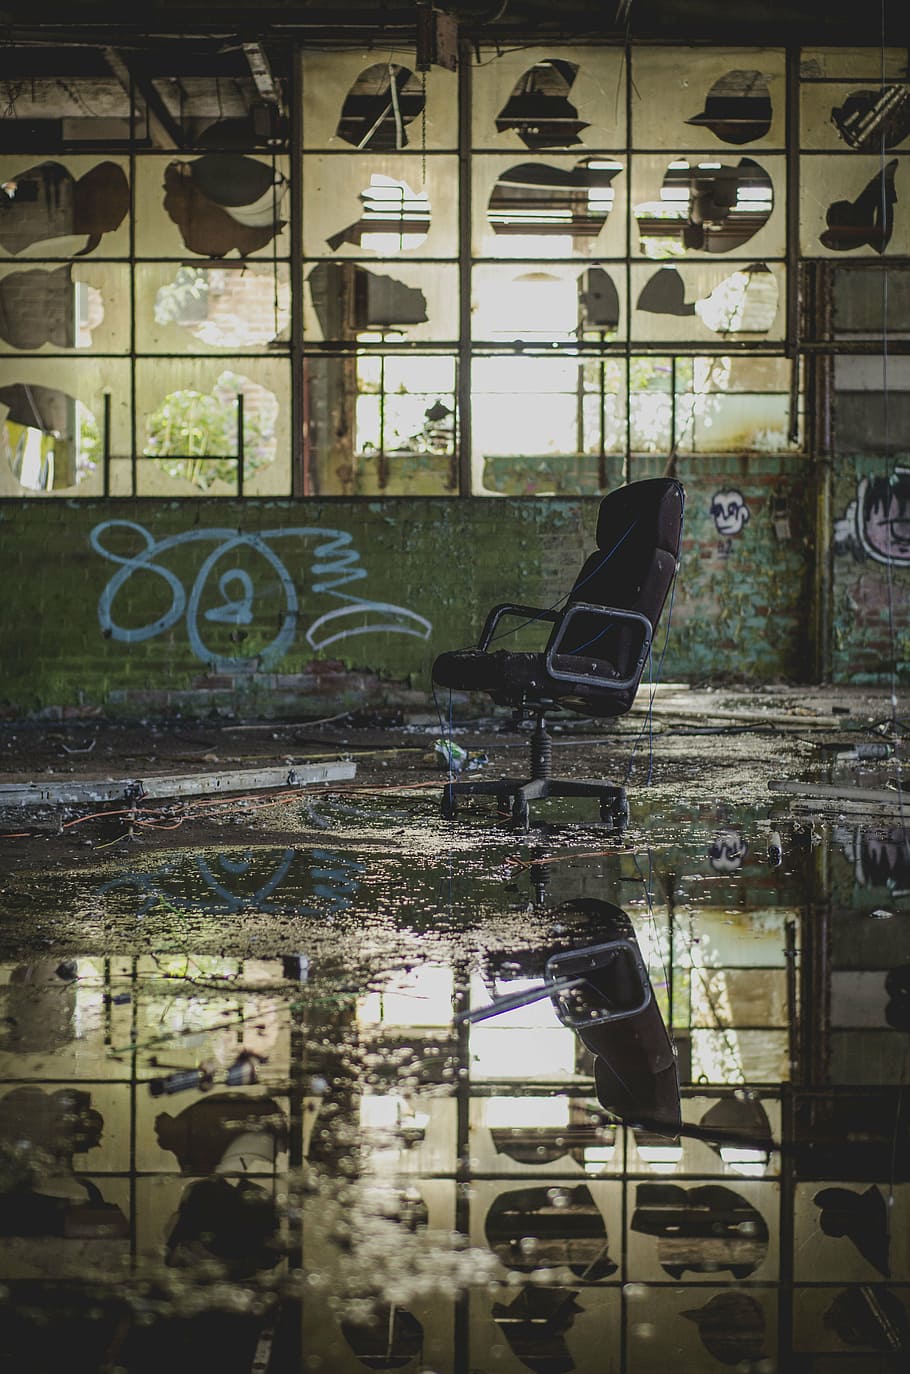 krem, hitam, abstrak, lukisan, kursi, refleksi, air, banjir, ditinggalkan, bangunan